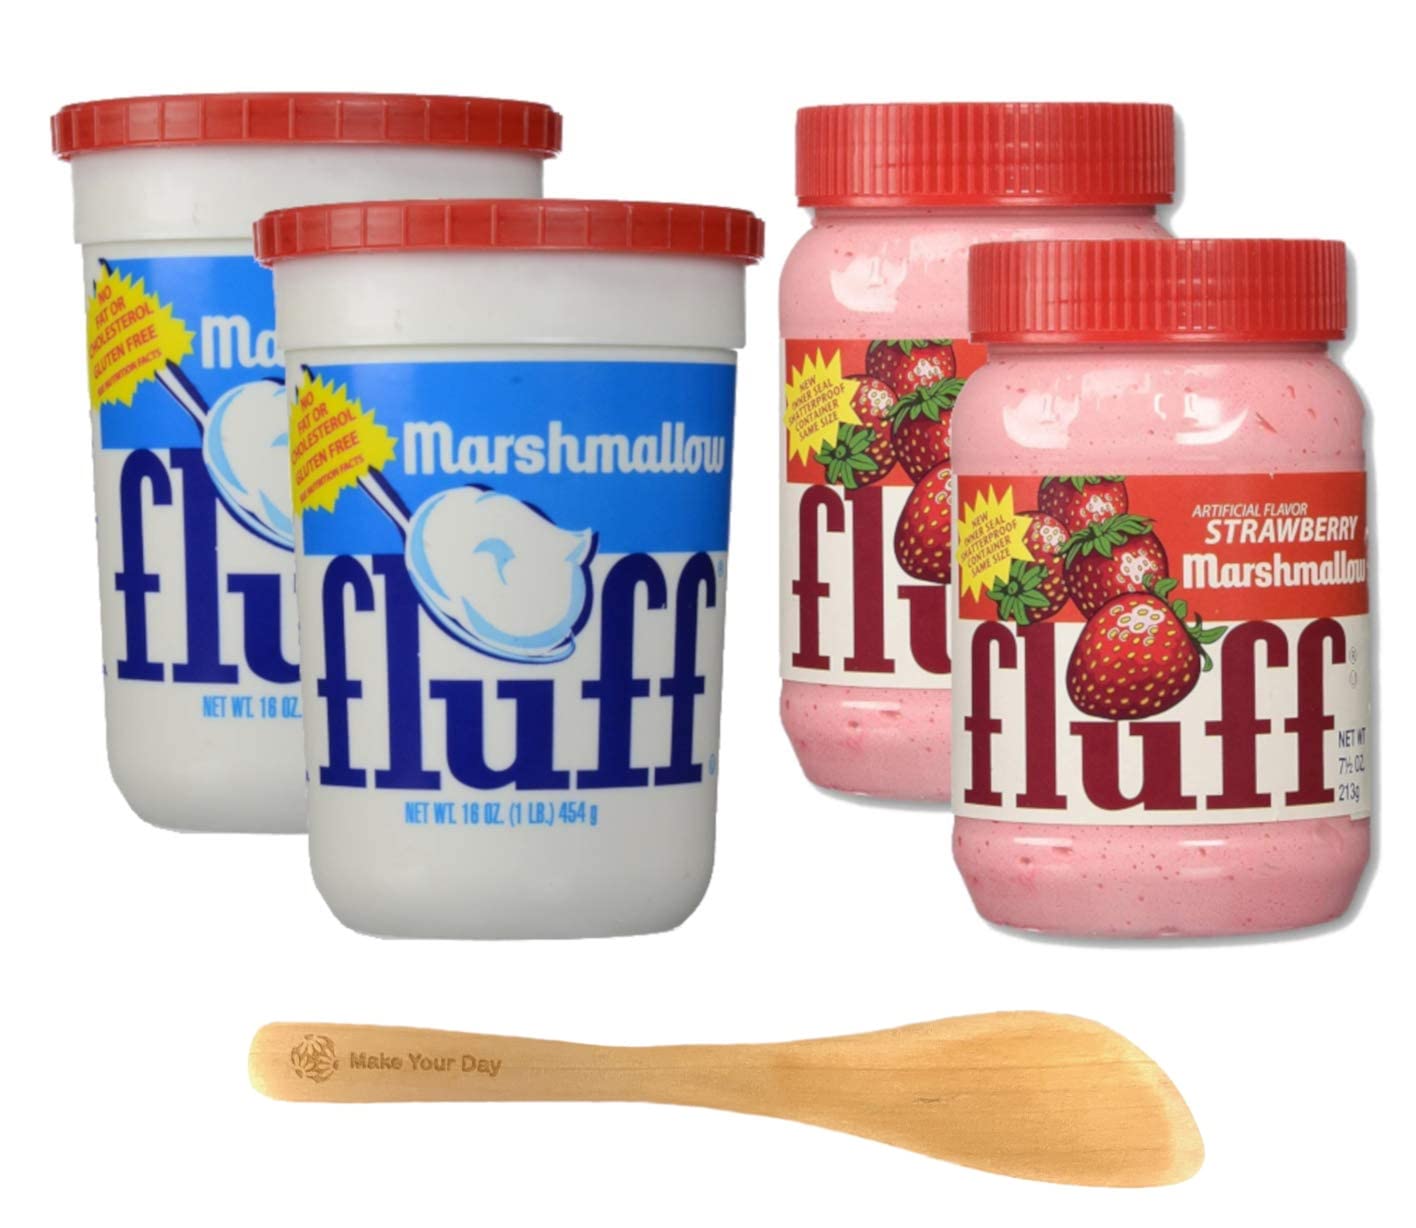  Fluff Marshmallow Fluff Original, 16 oz : Grocery